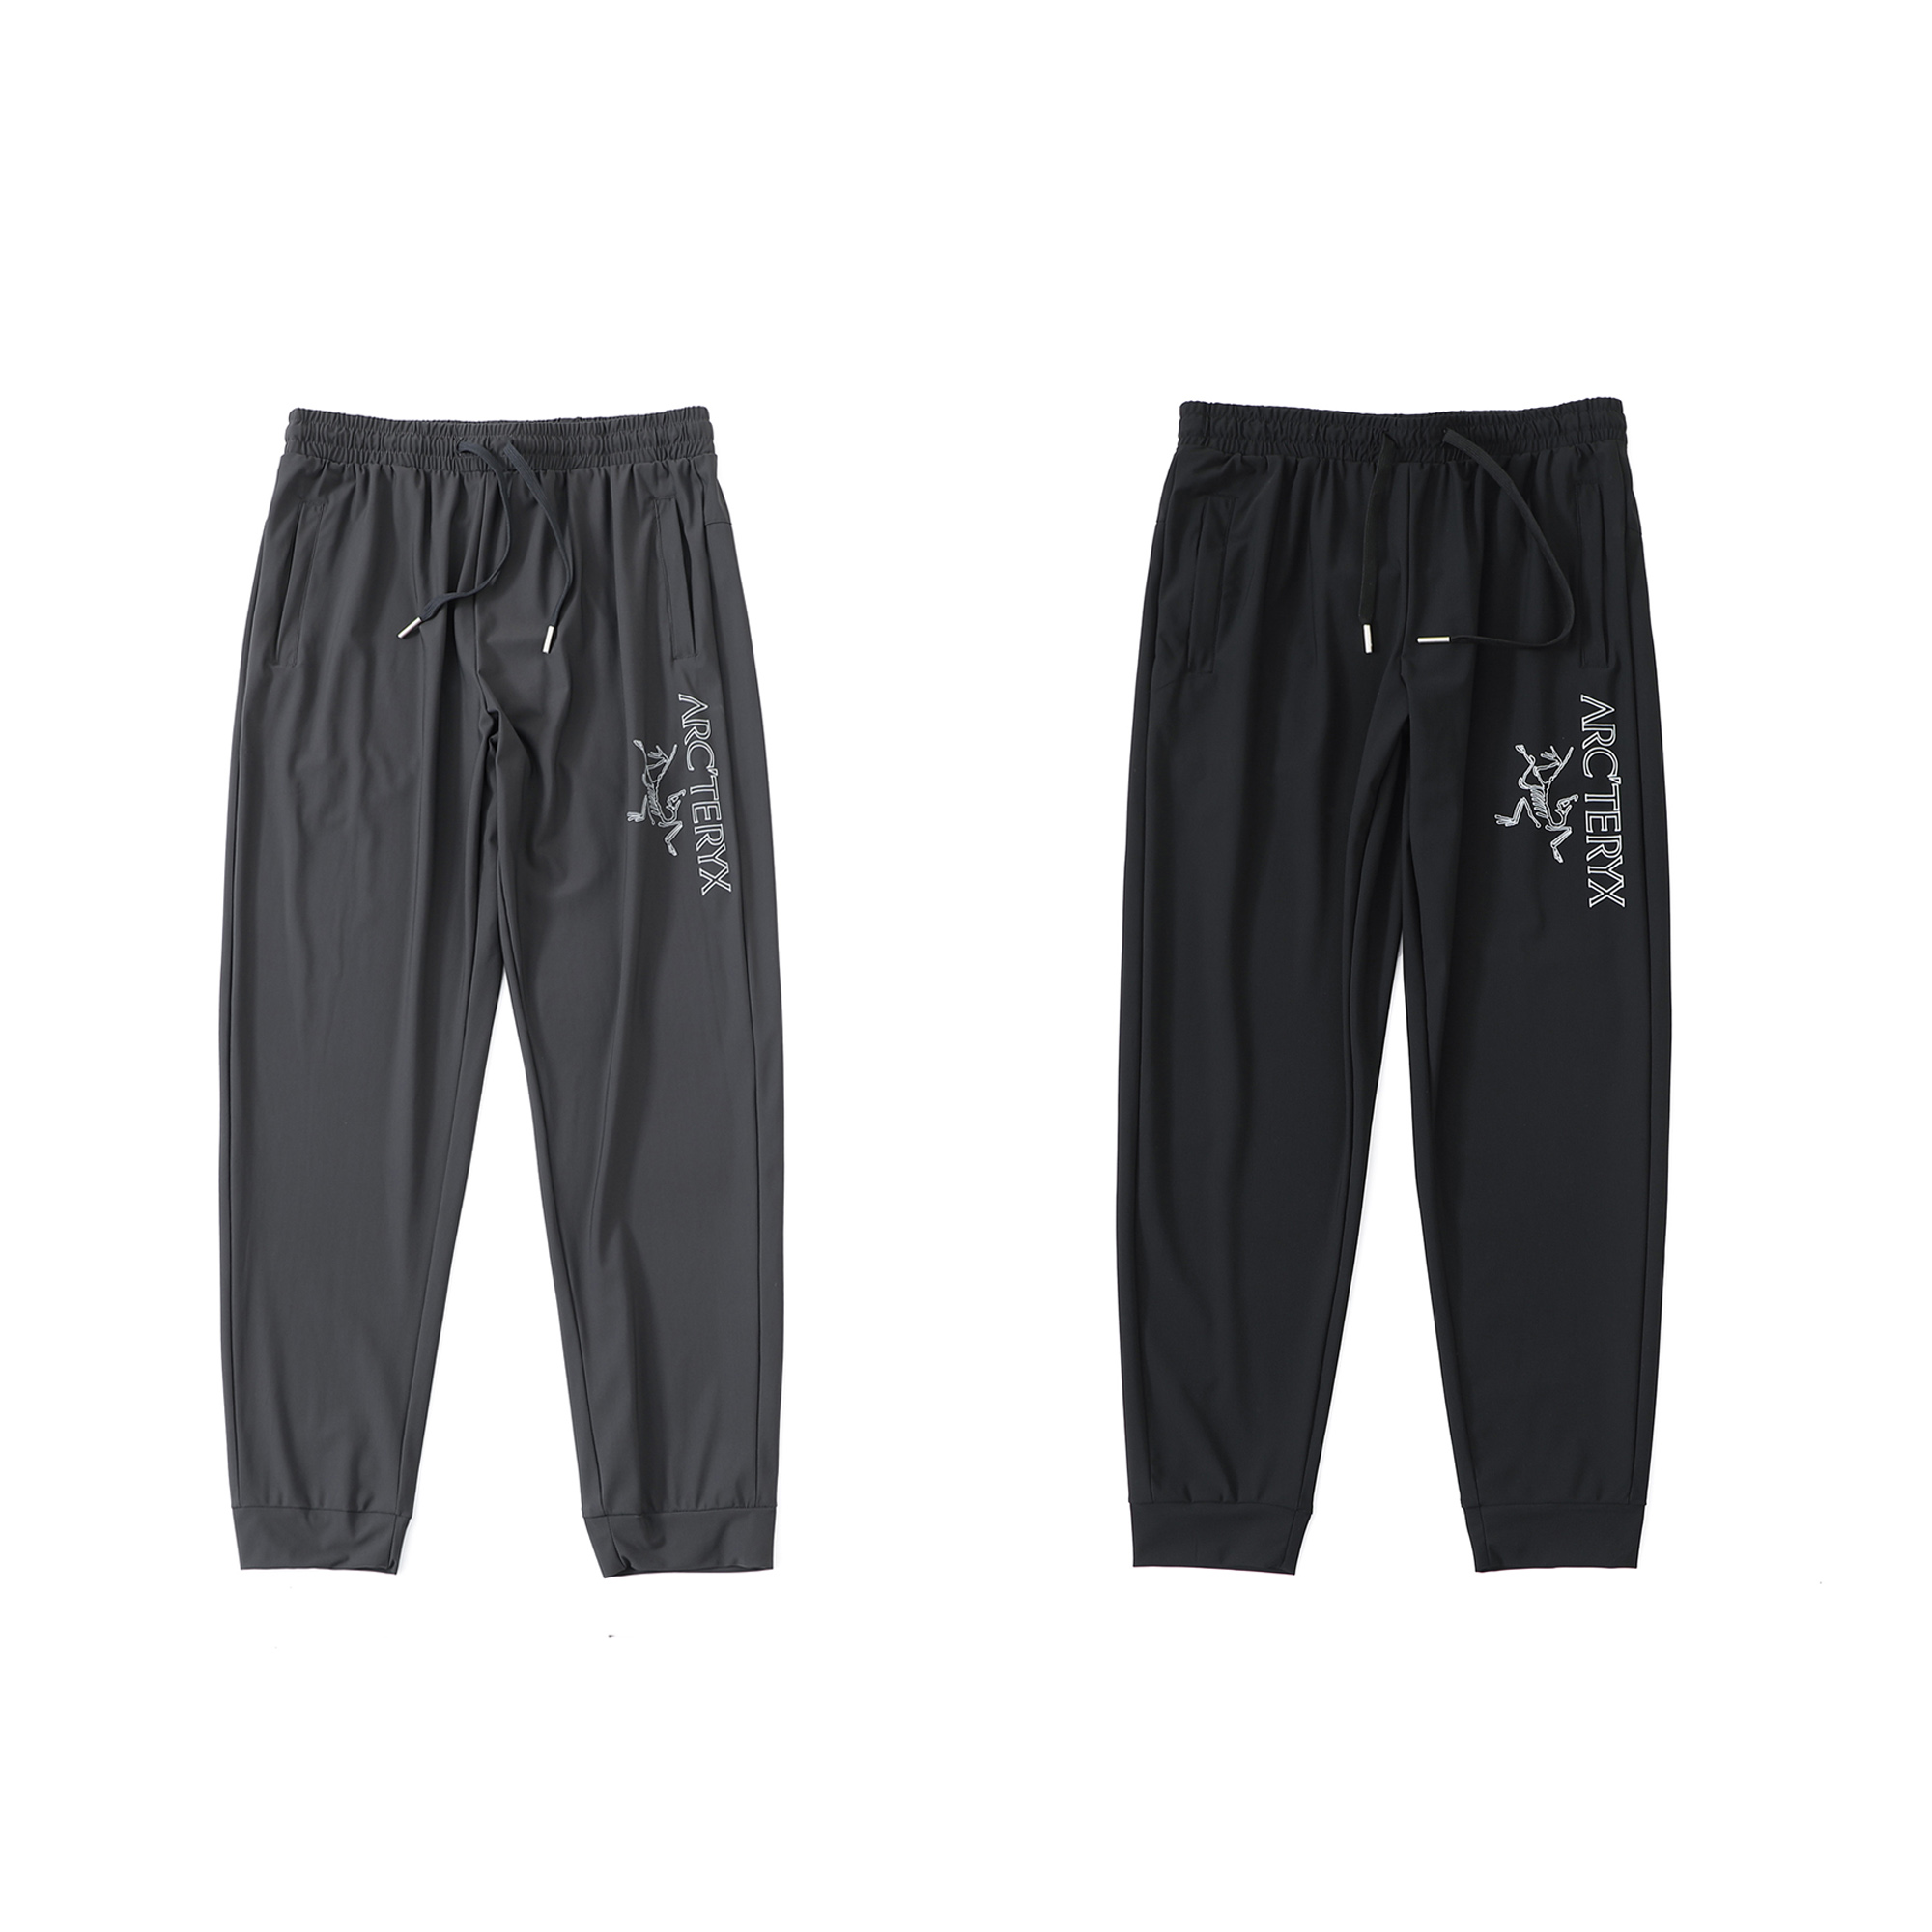 Arc’teryx Clothing Pants & Trousers Black Grey Men Fashion Quick Dry